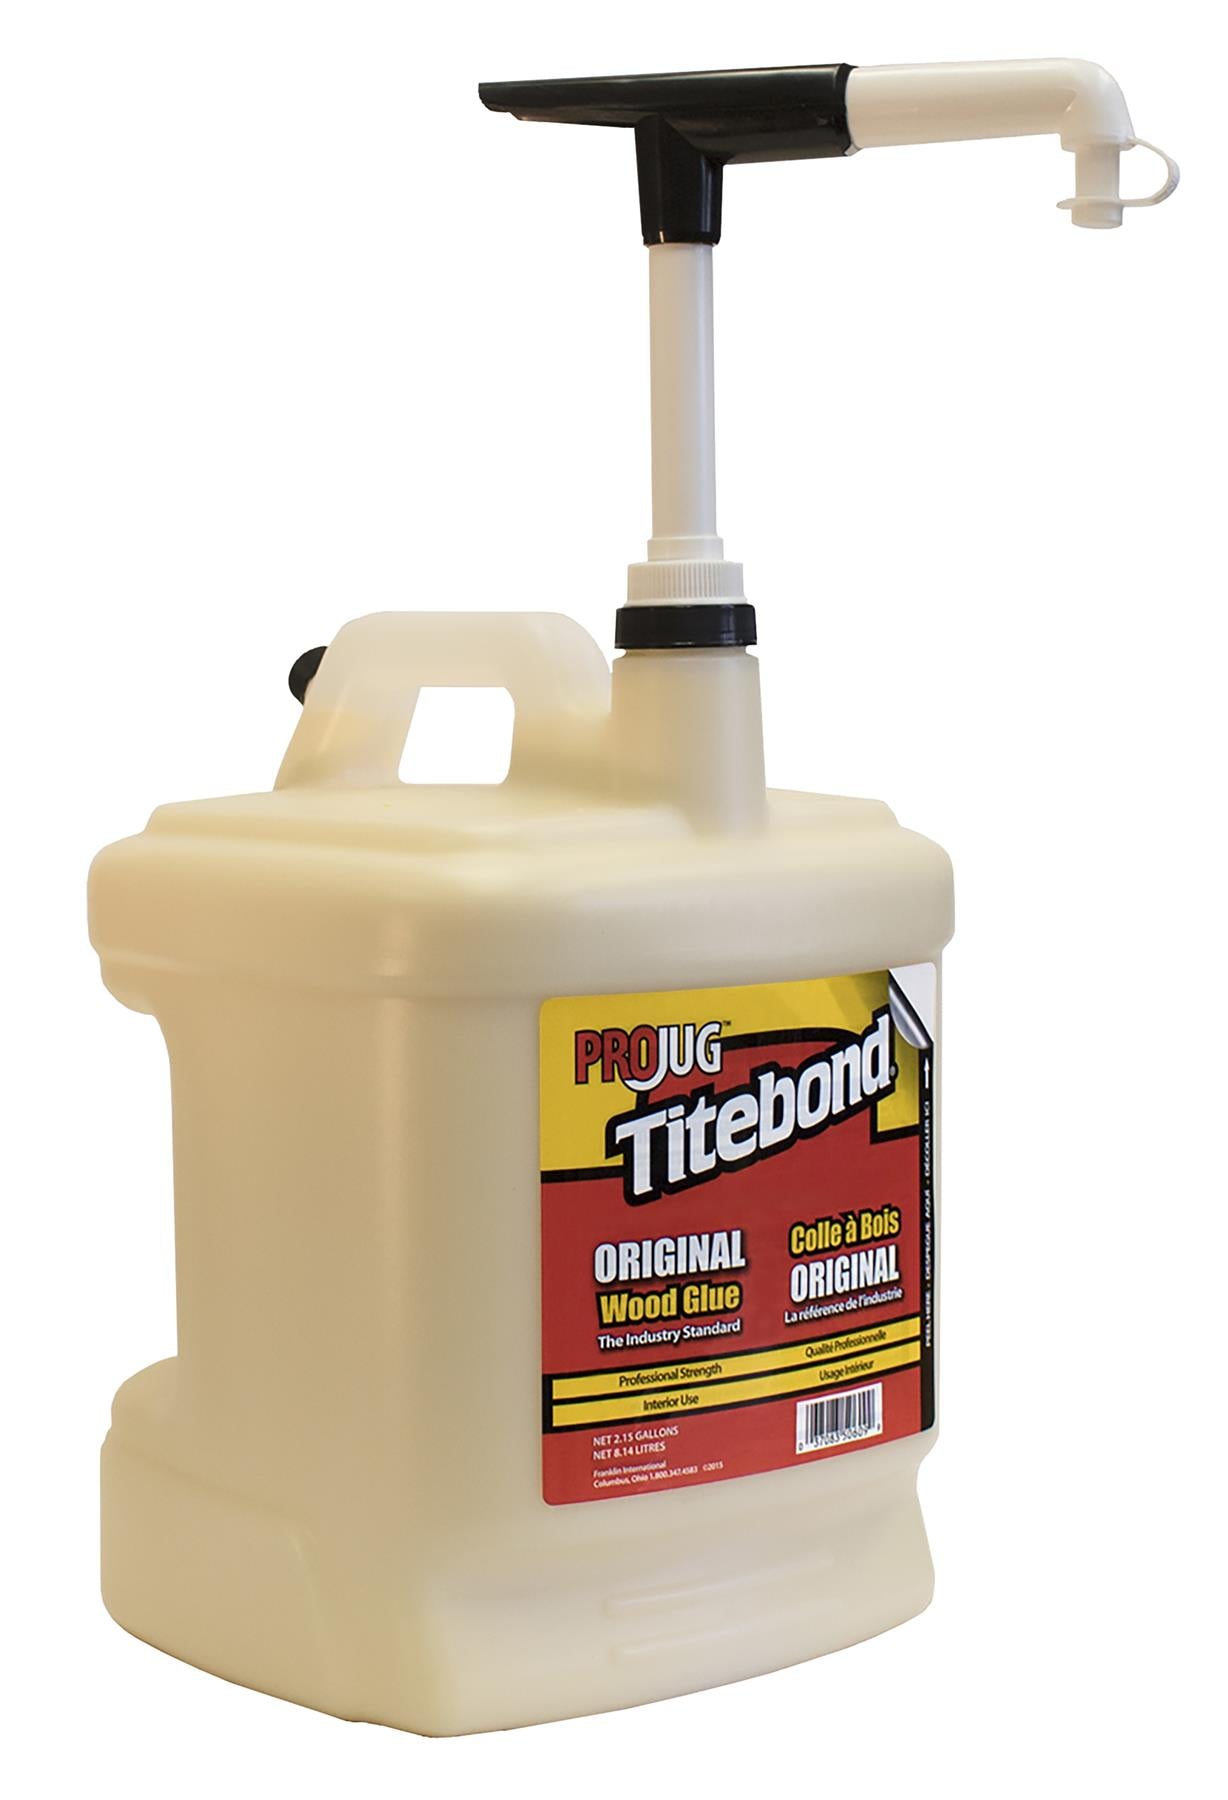 Titebond 50609 Original Wood Glue (2.15Gallon) 8.14 litre Projug